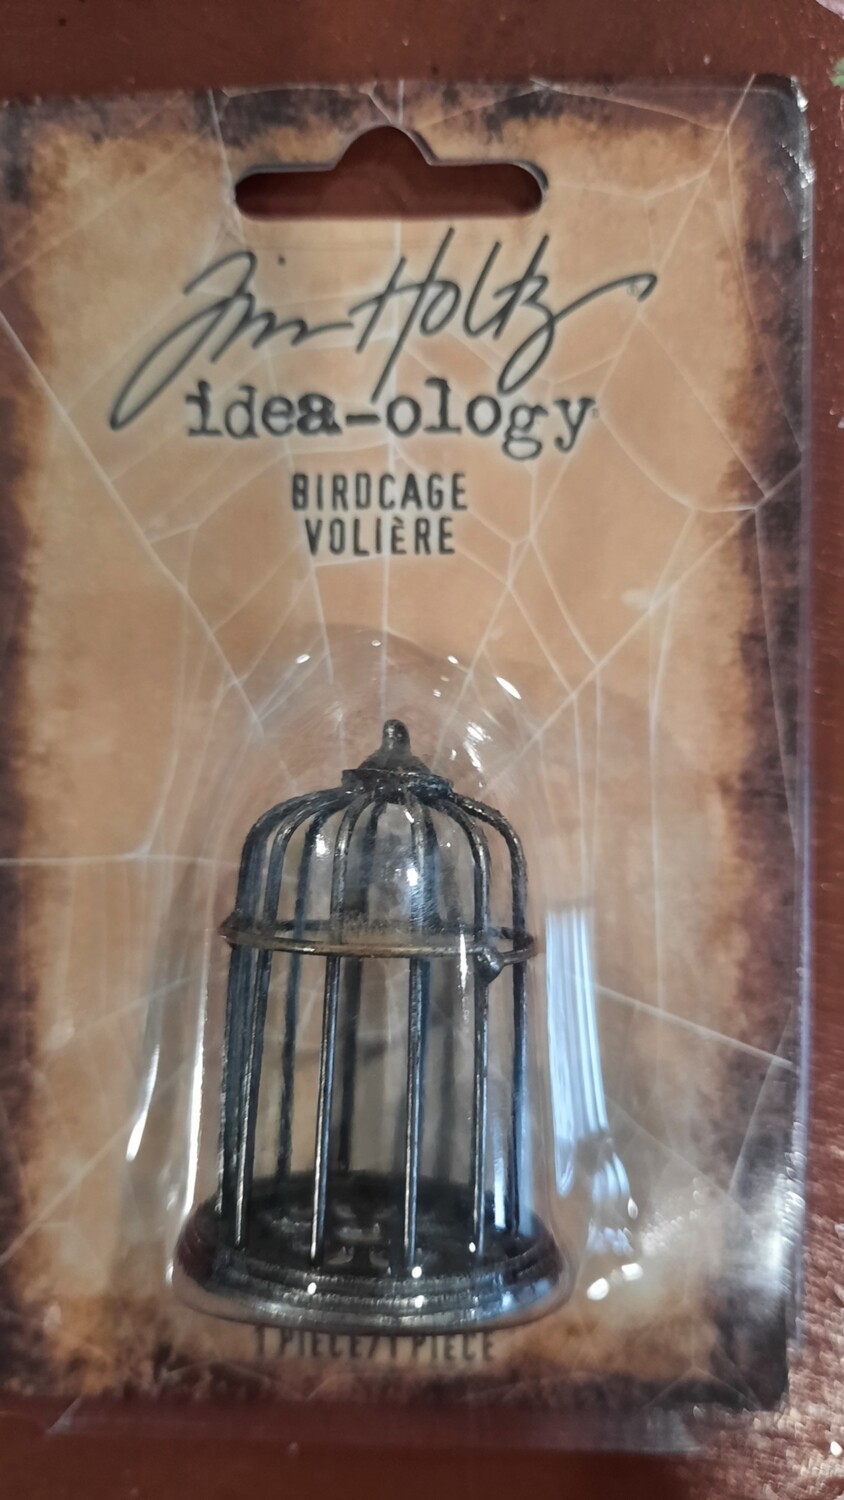 Ideaology Birdcage